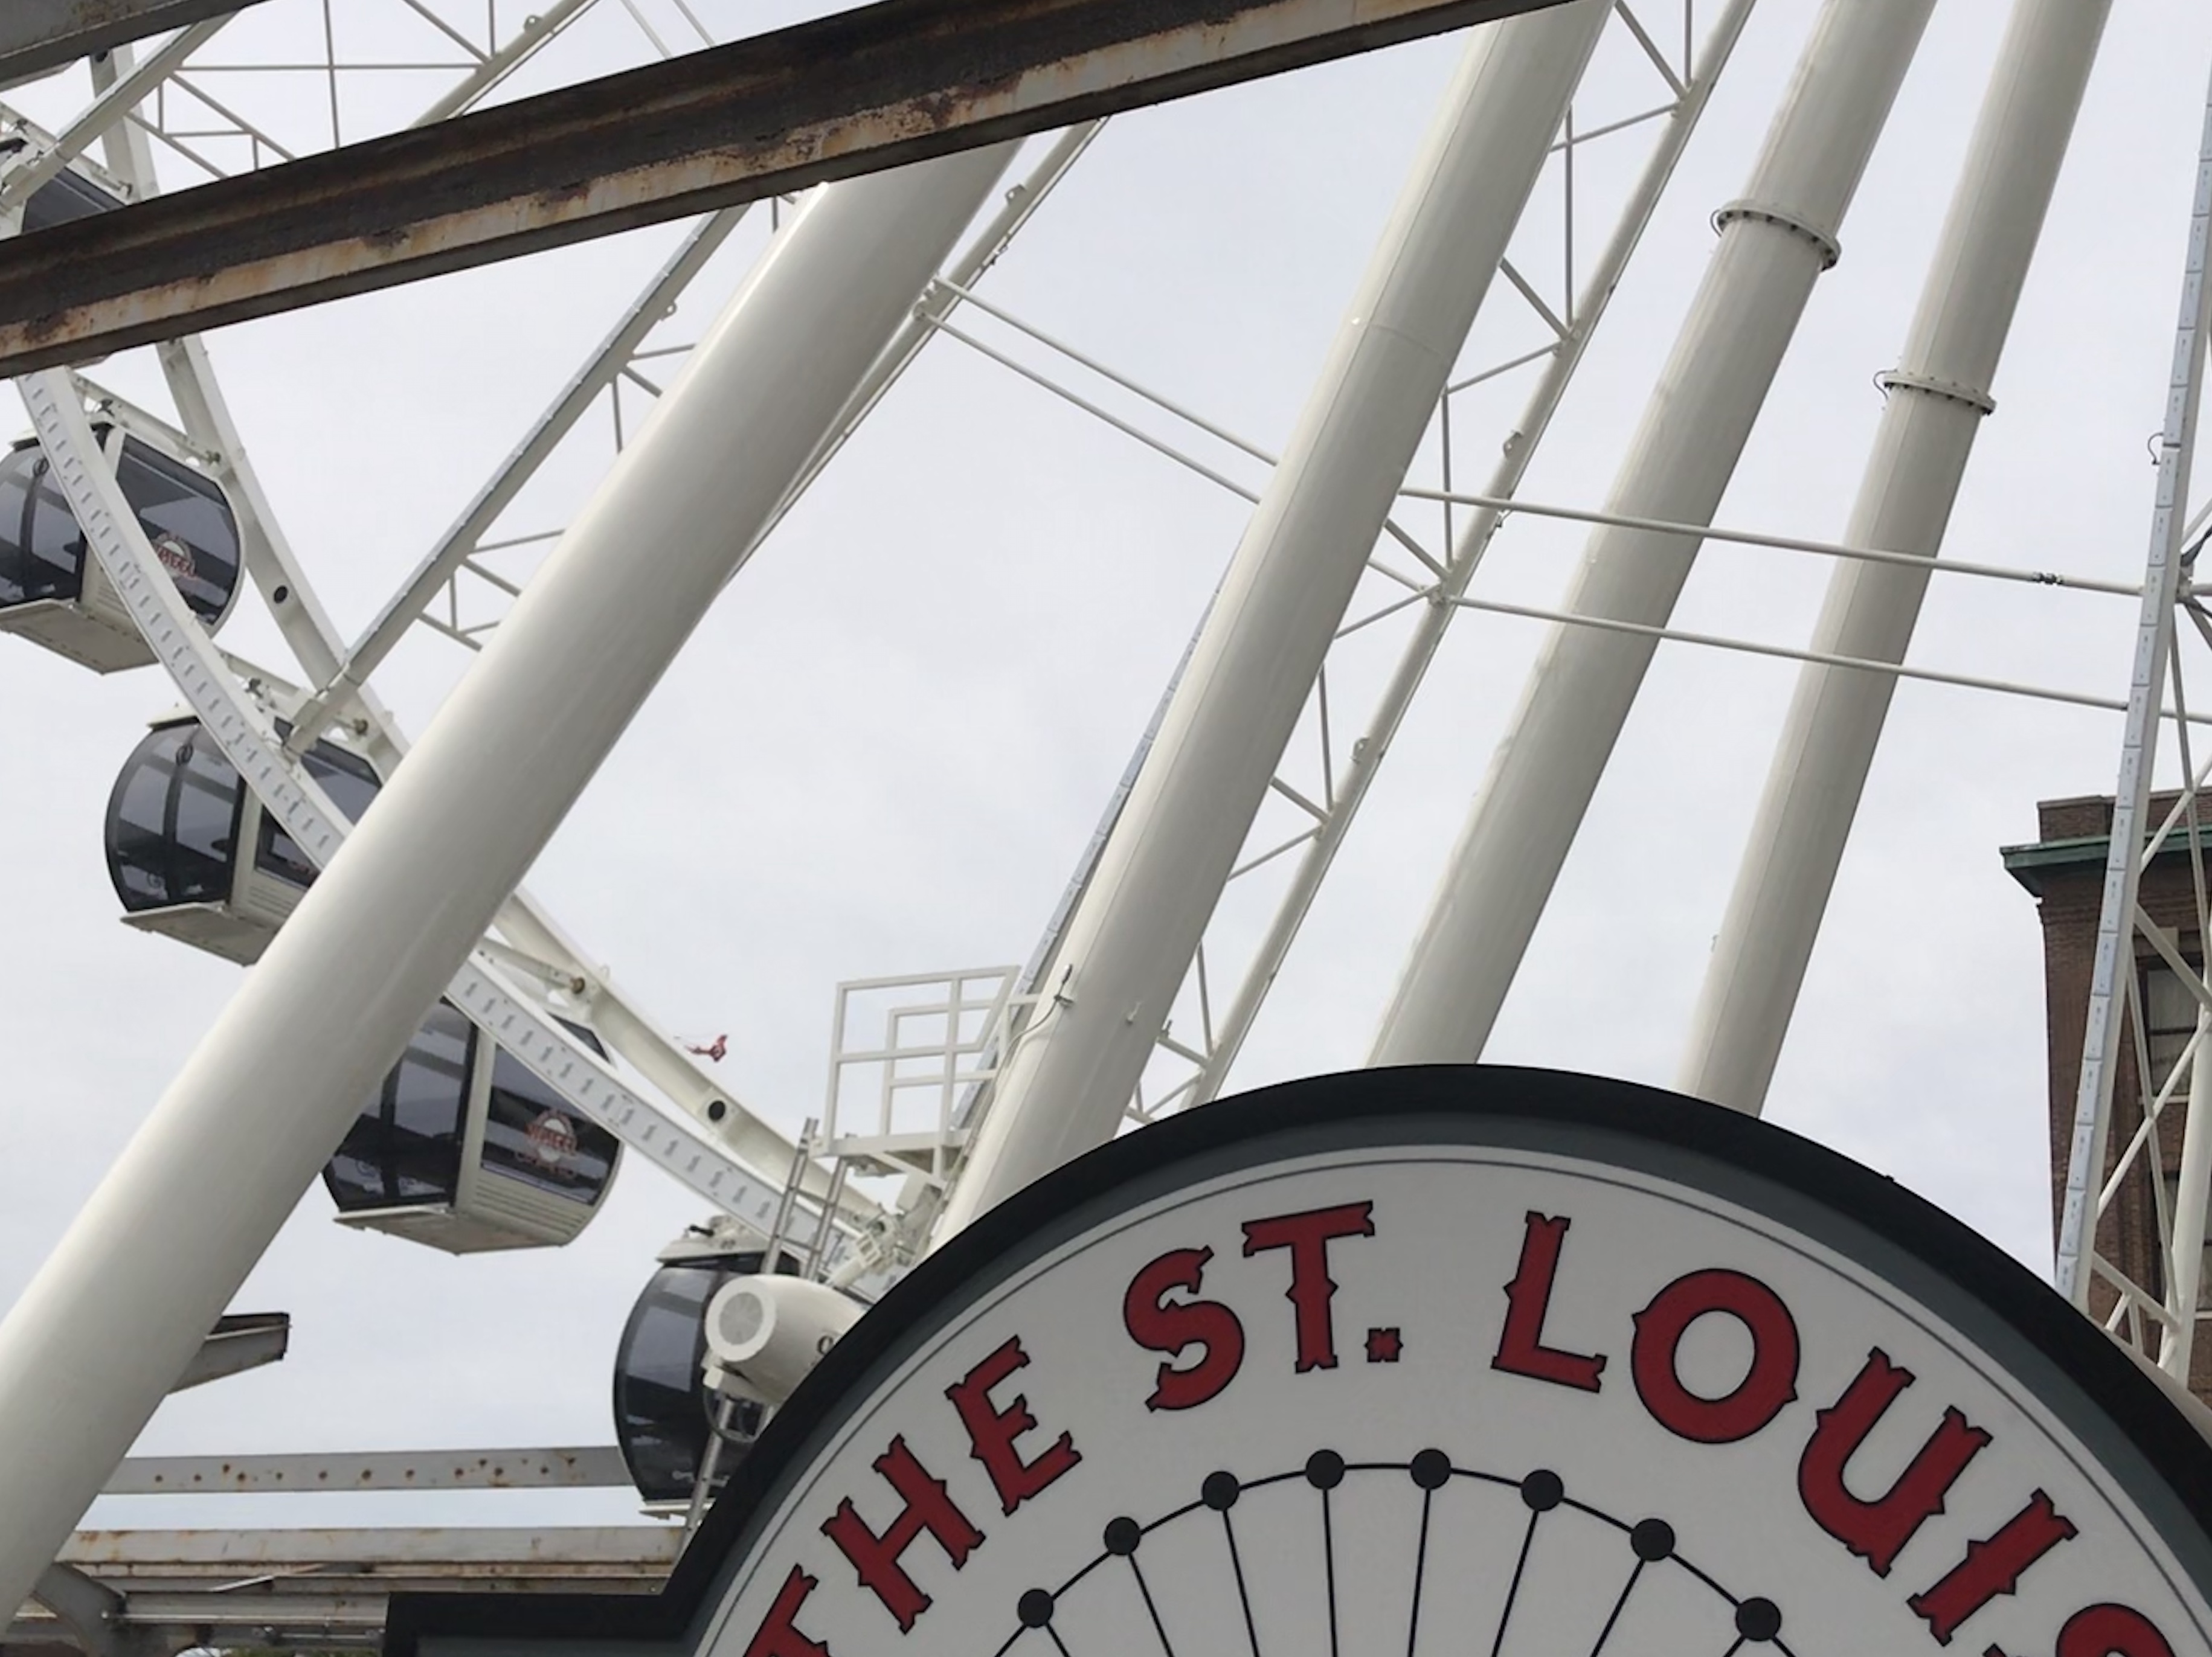 Downtown St. Louis Ferris Wheel.